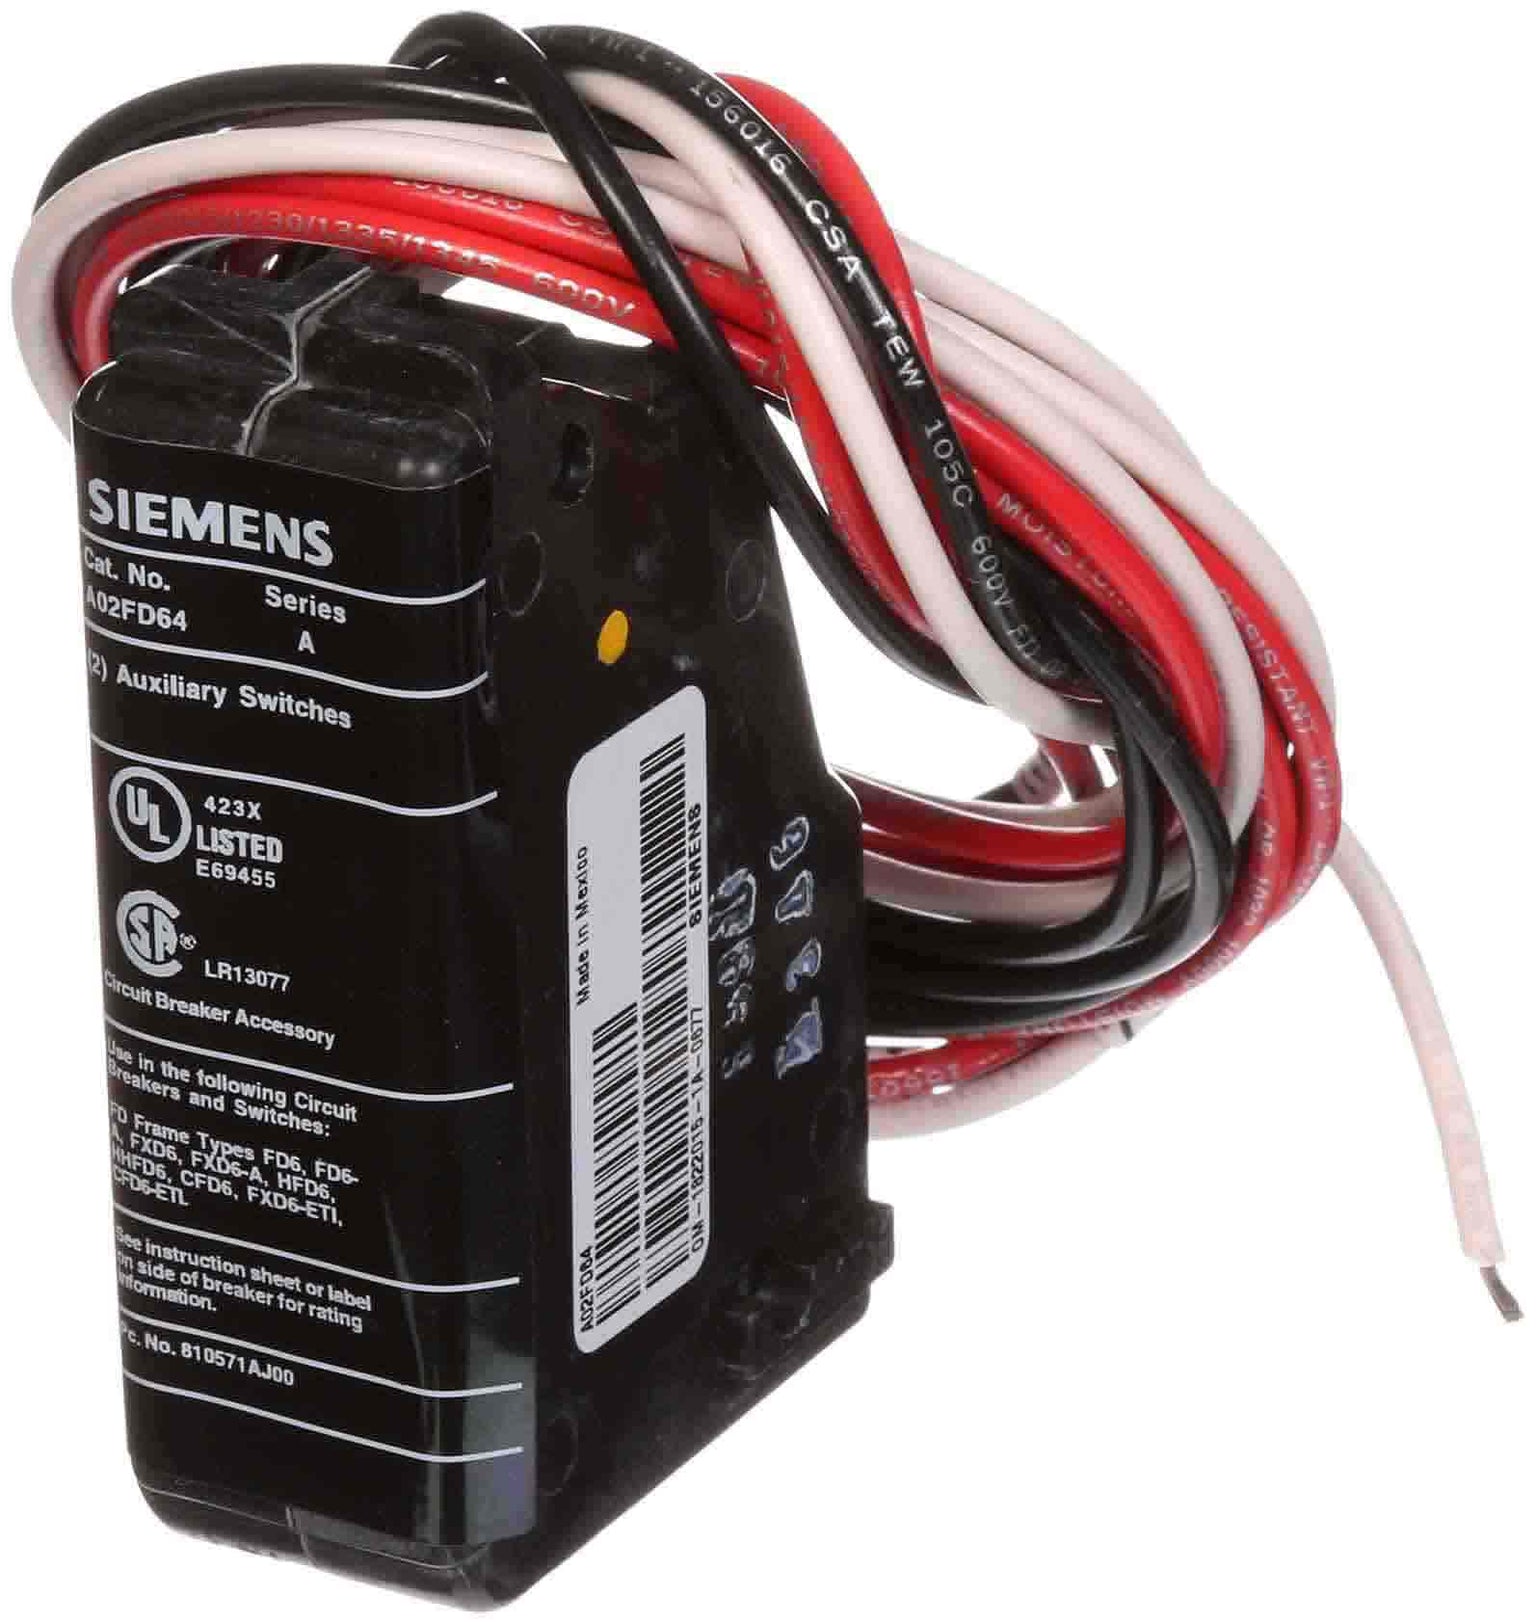 A02FD64 - Siemens - Auxiliary Switch